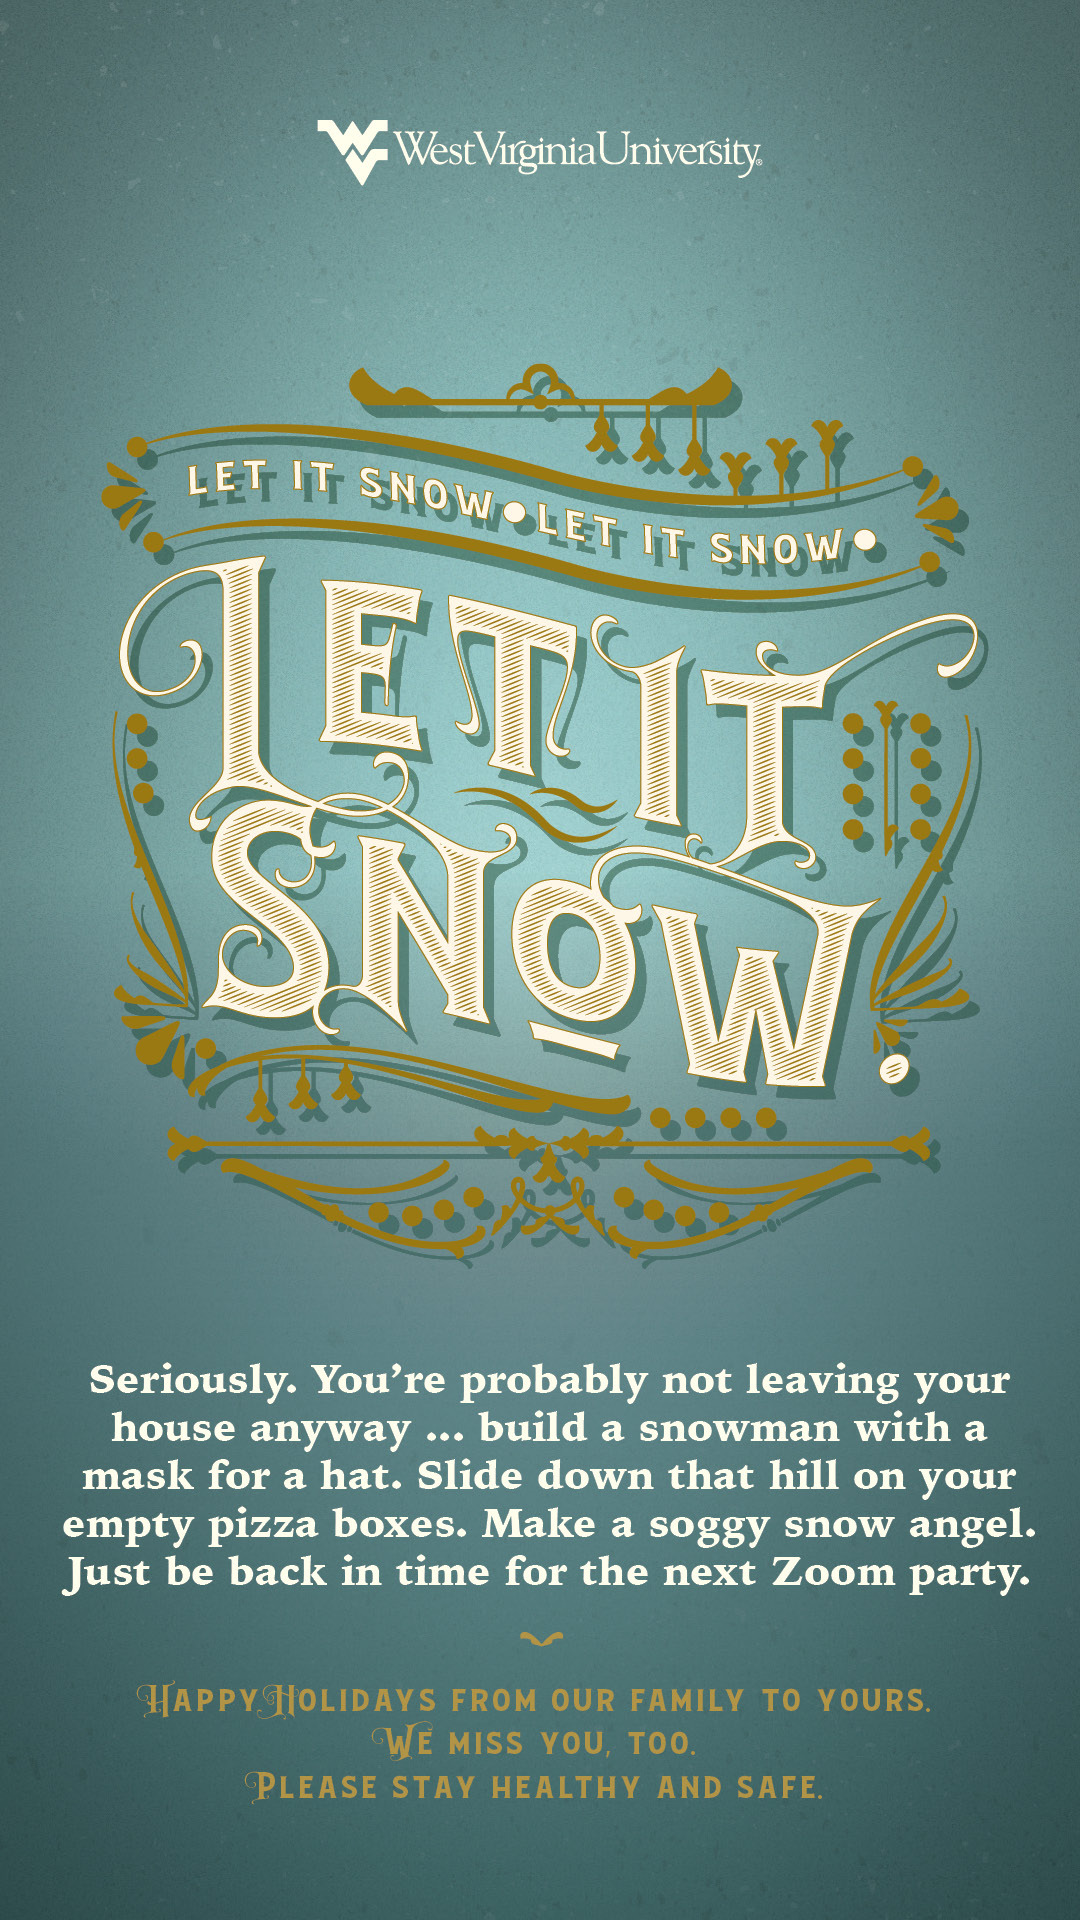 Let It Snow poster. Poster content below image.